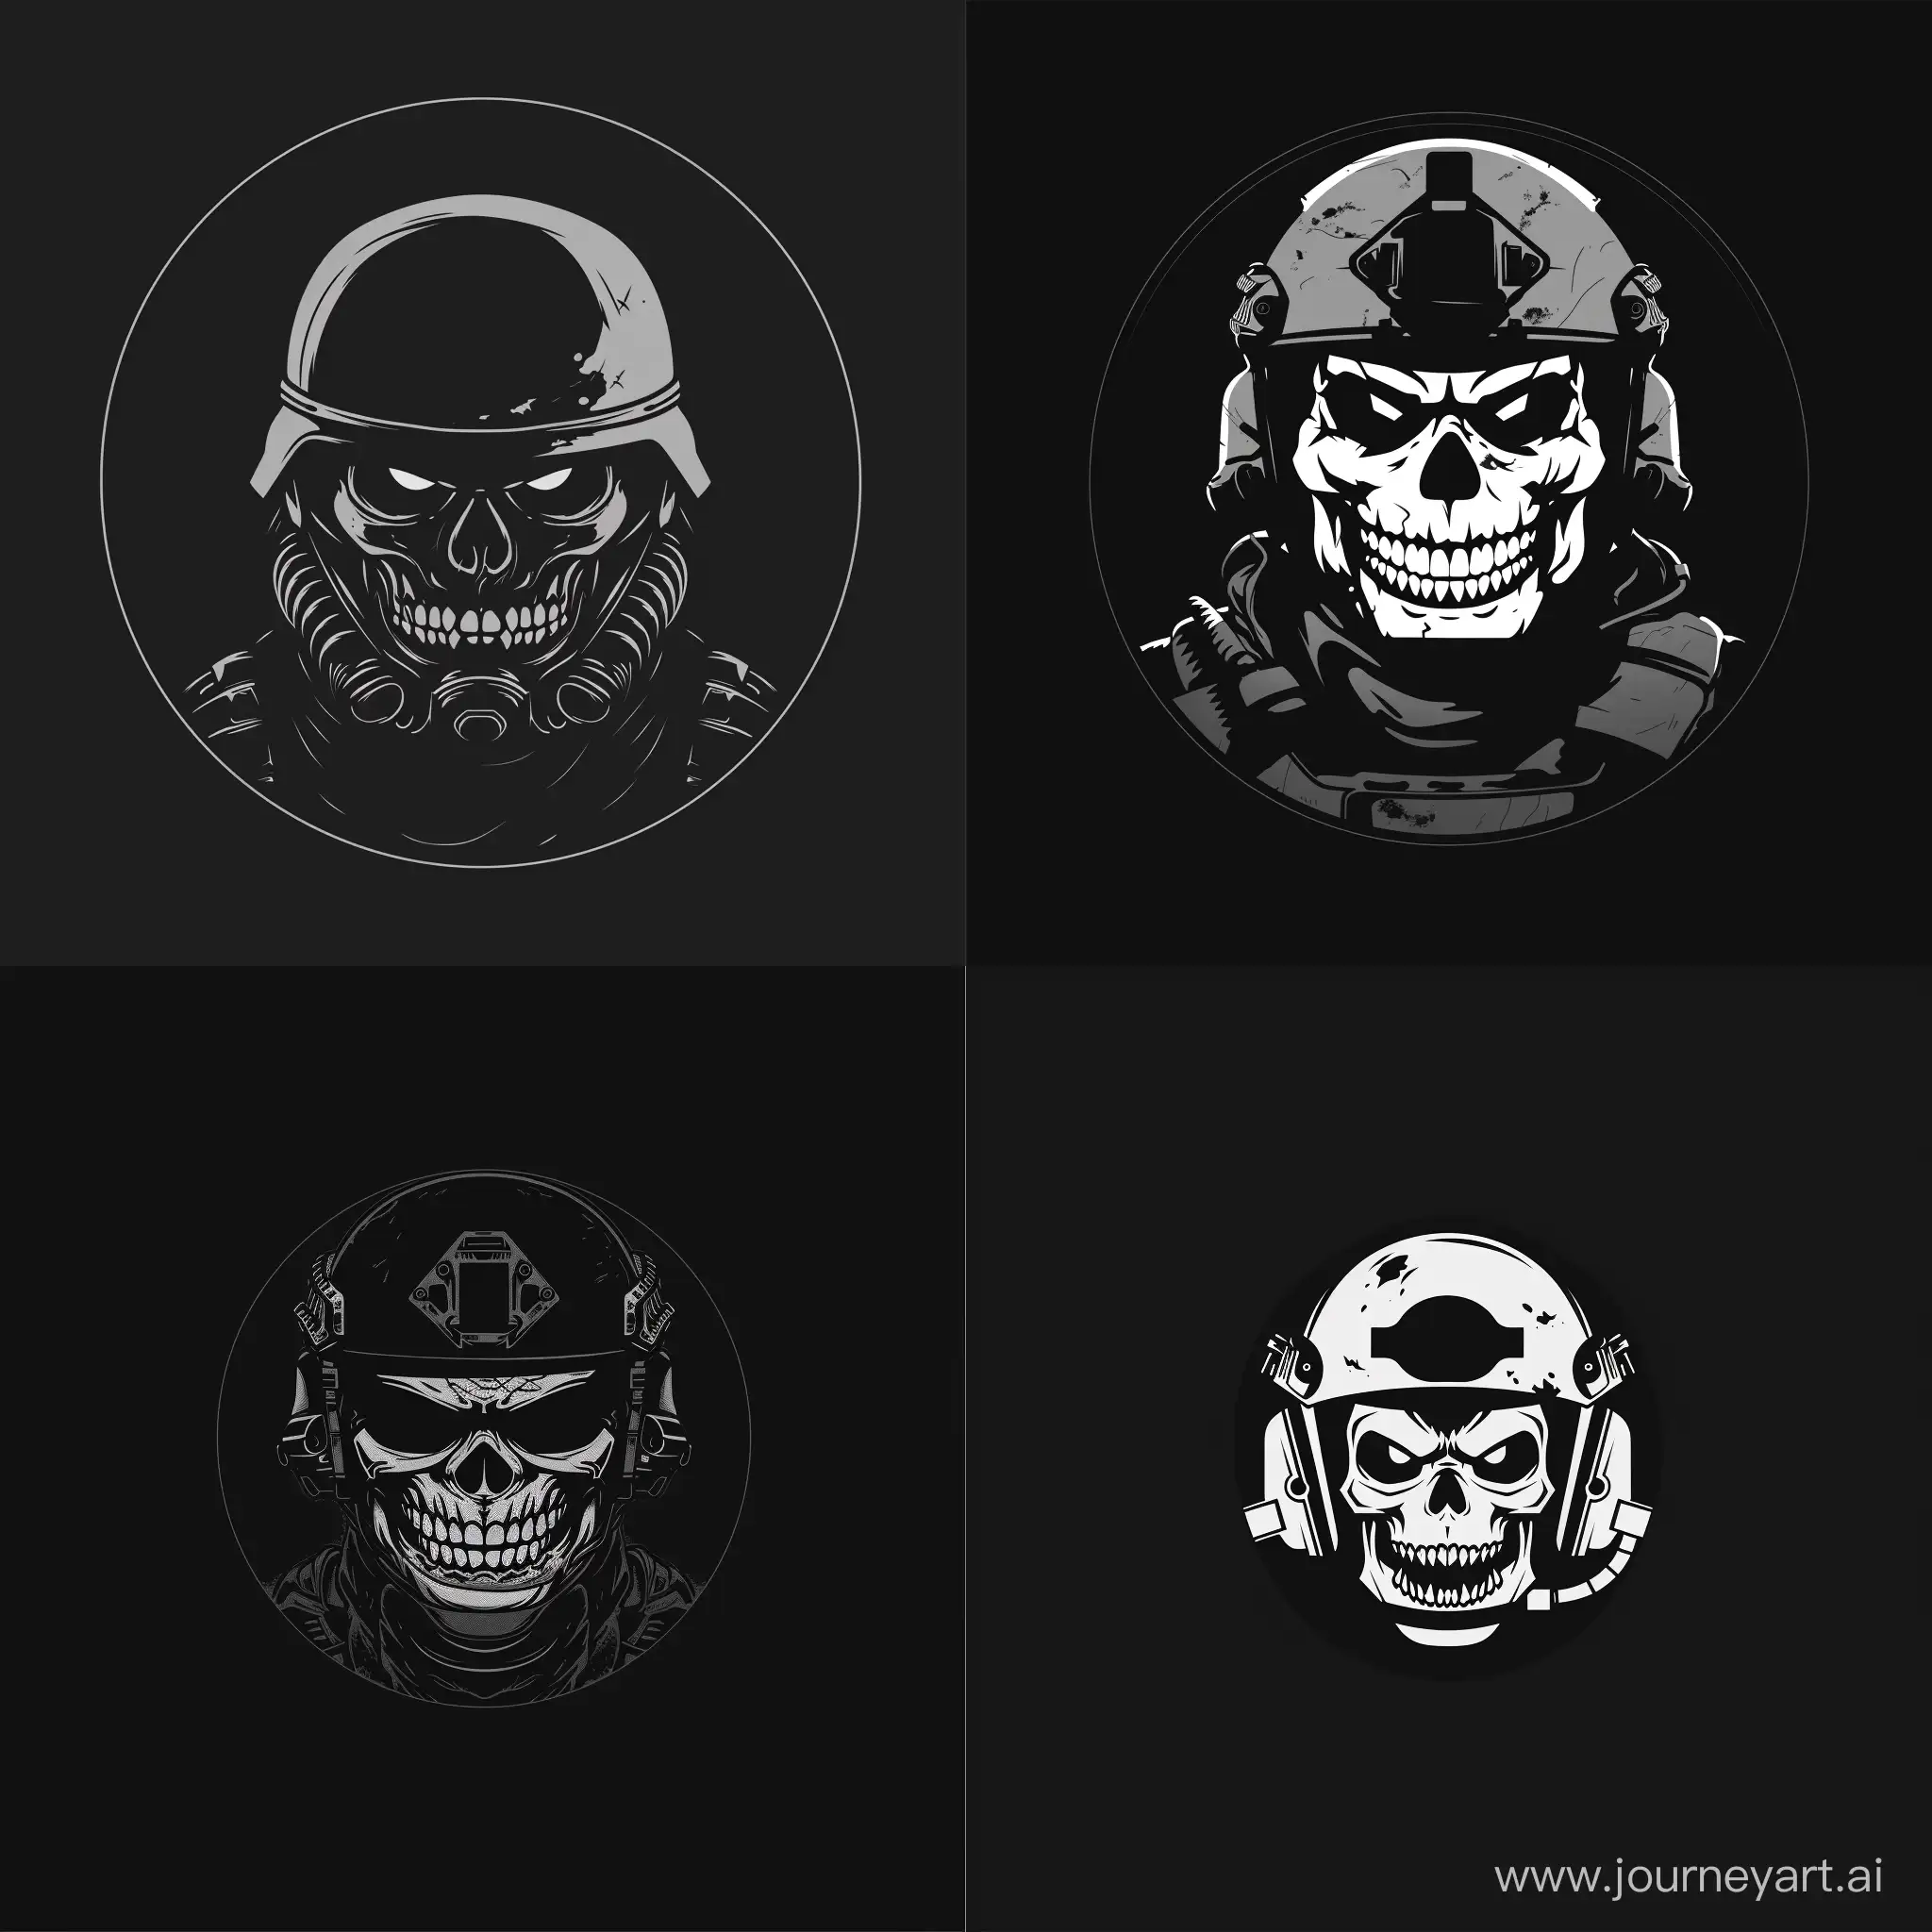 logo, black circle, angry smile, minimalistic, modern military equipment, helmet, madness in eyes, skull mask, black background